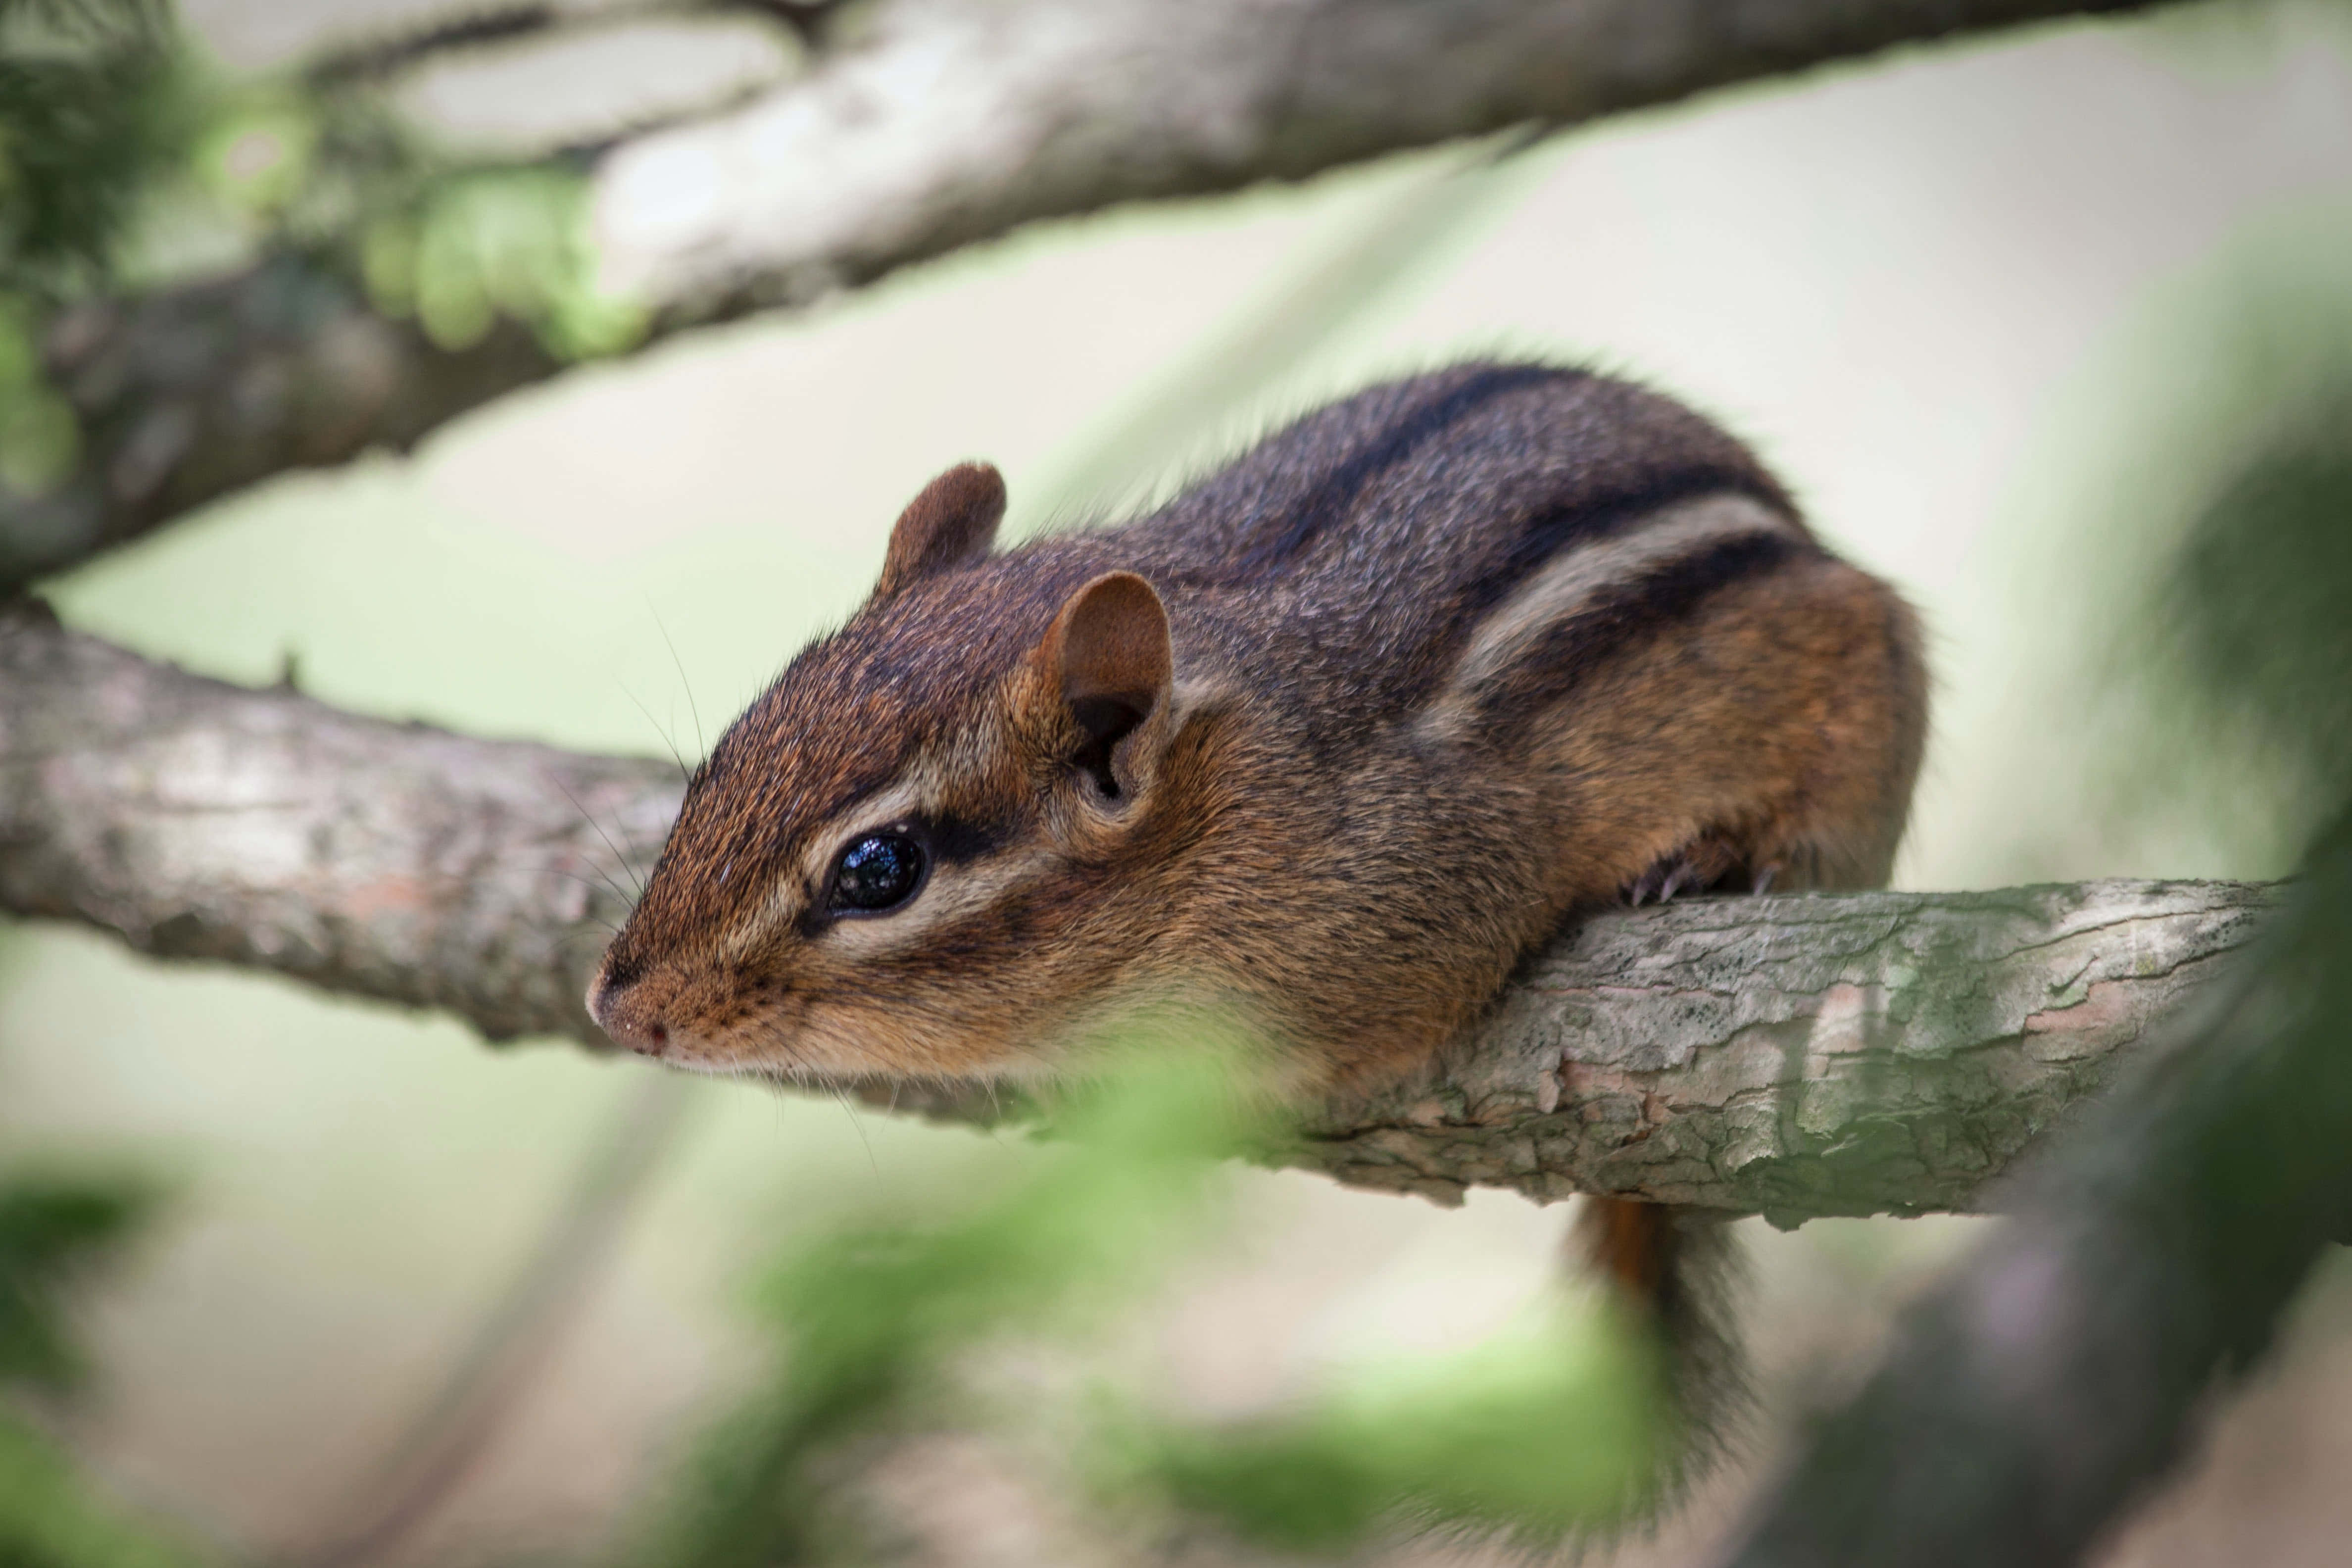 A cute chipmunk enjoying its natural habitat.